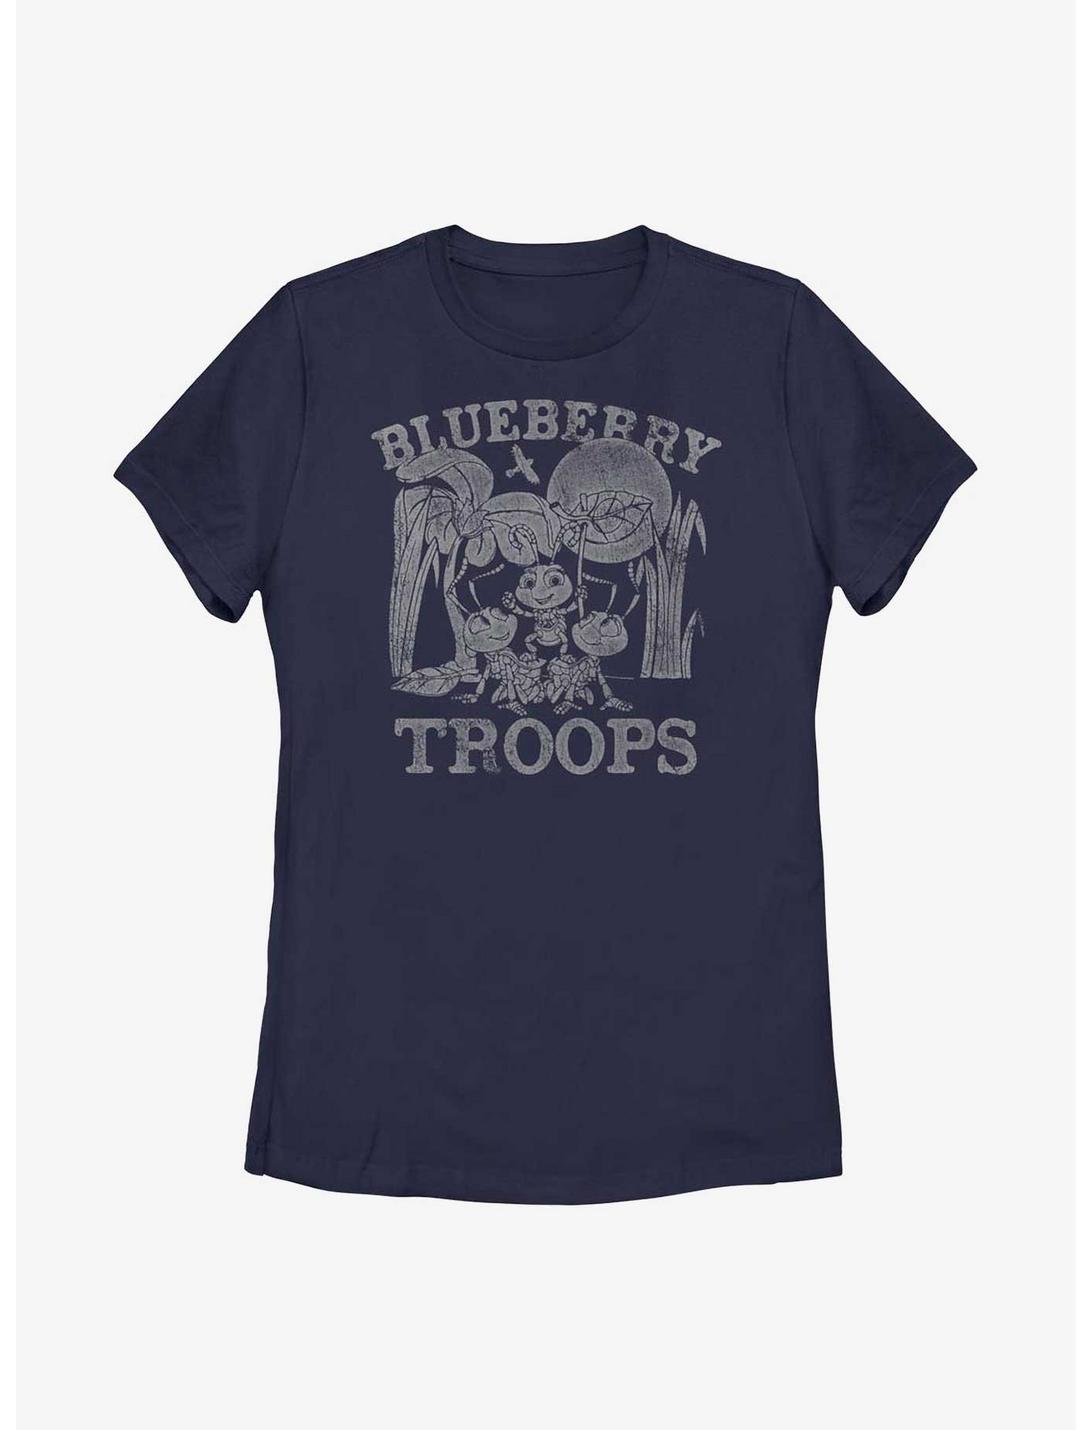 Disney Pixar A Bug's Life Blueberry Troops Womens T-Shirt, NAVY, hi-res